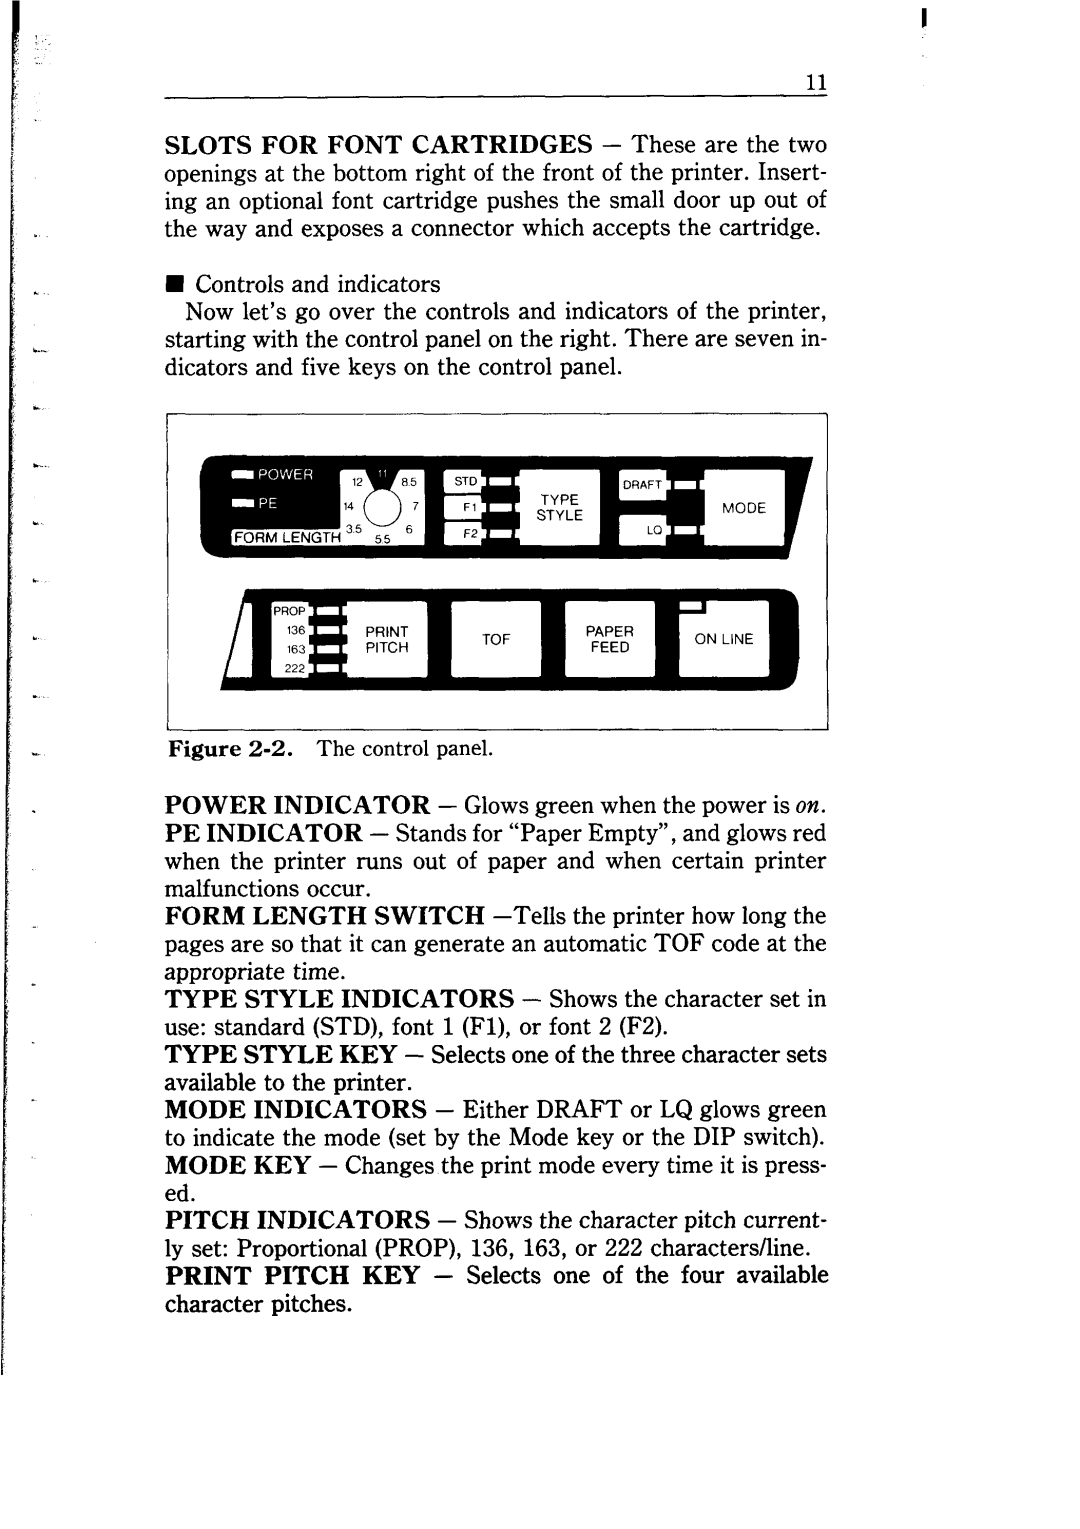 Star Micronics NB-15 user manual H Controls and indicators, 2. The control panel 